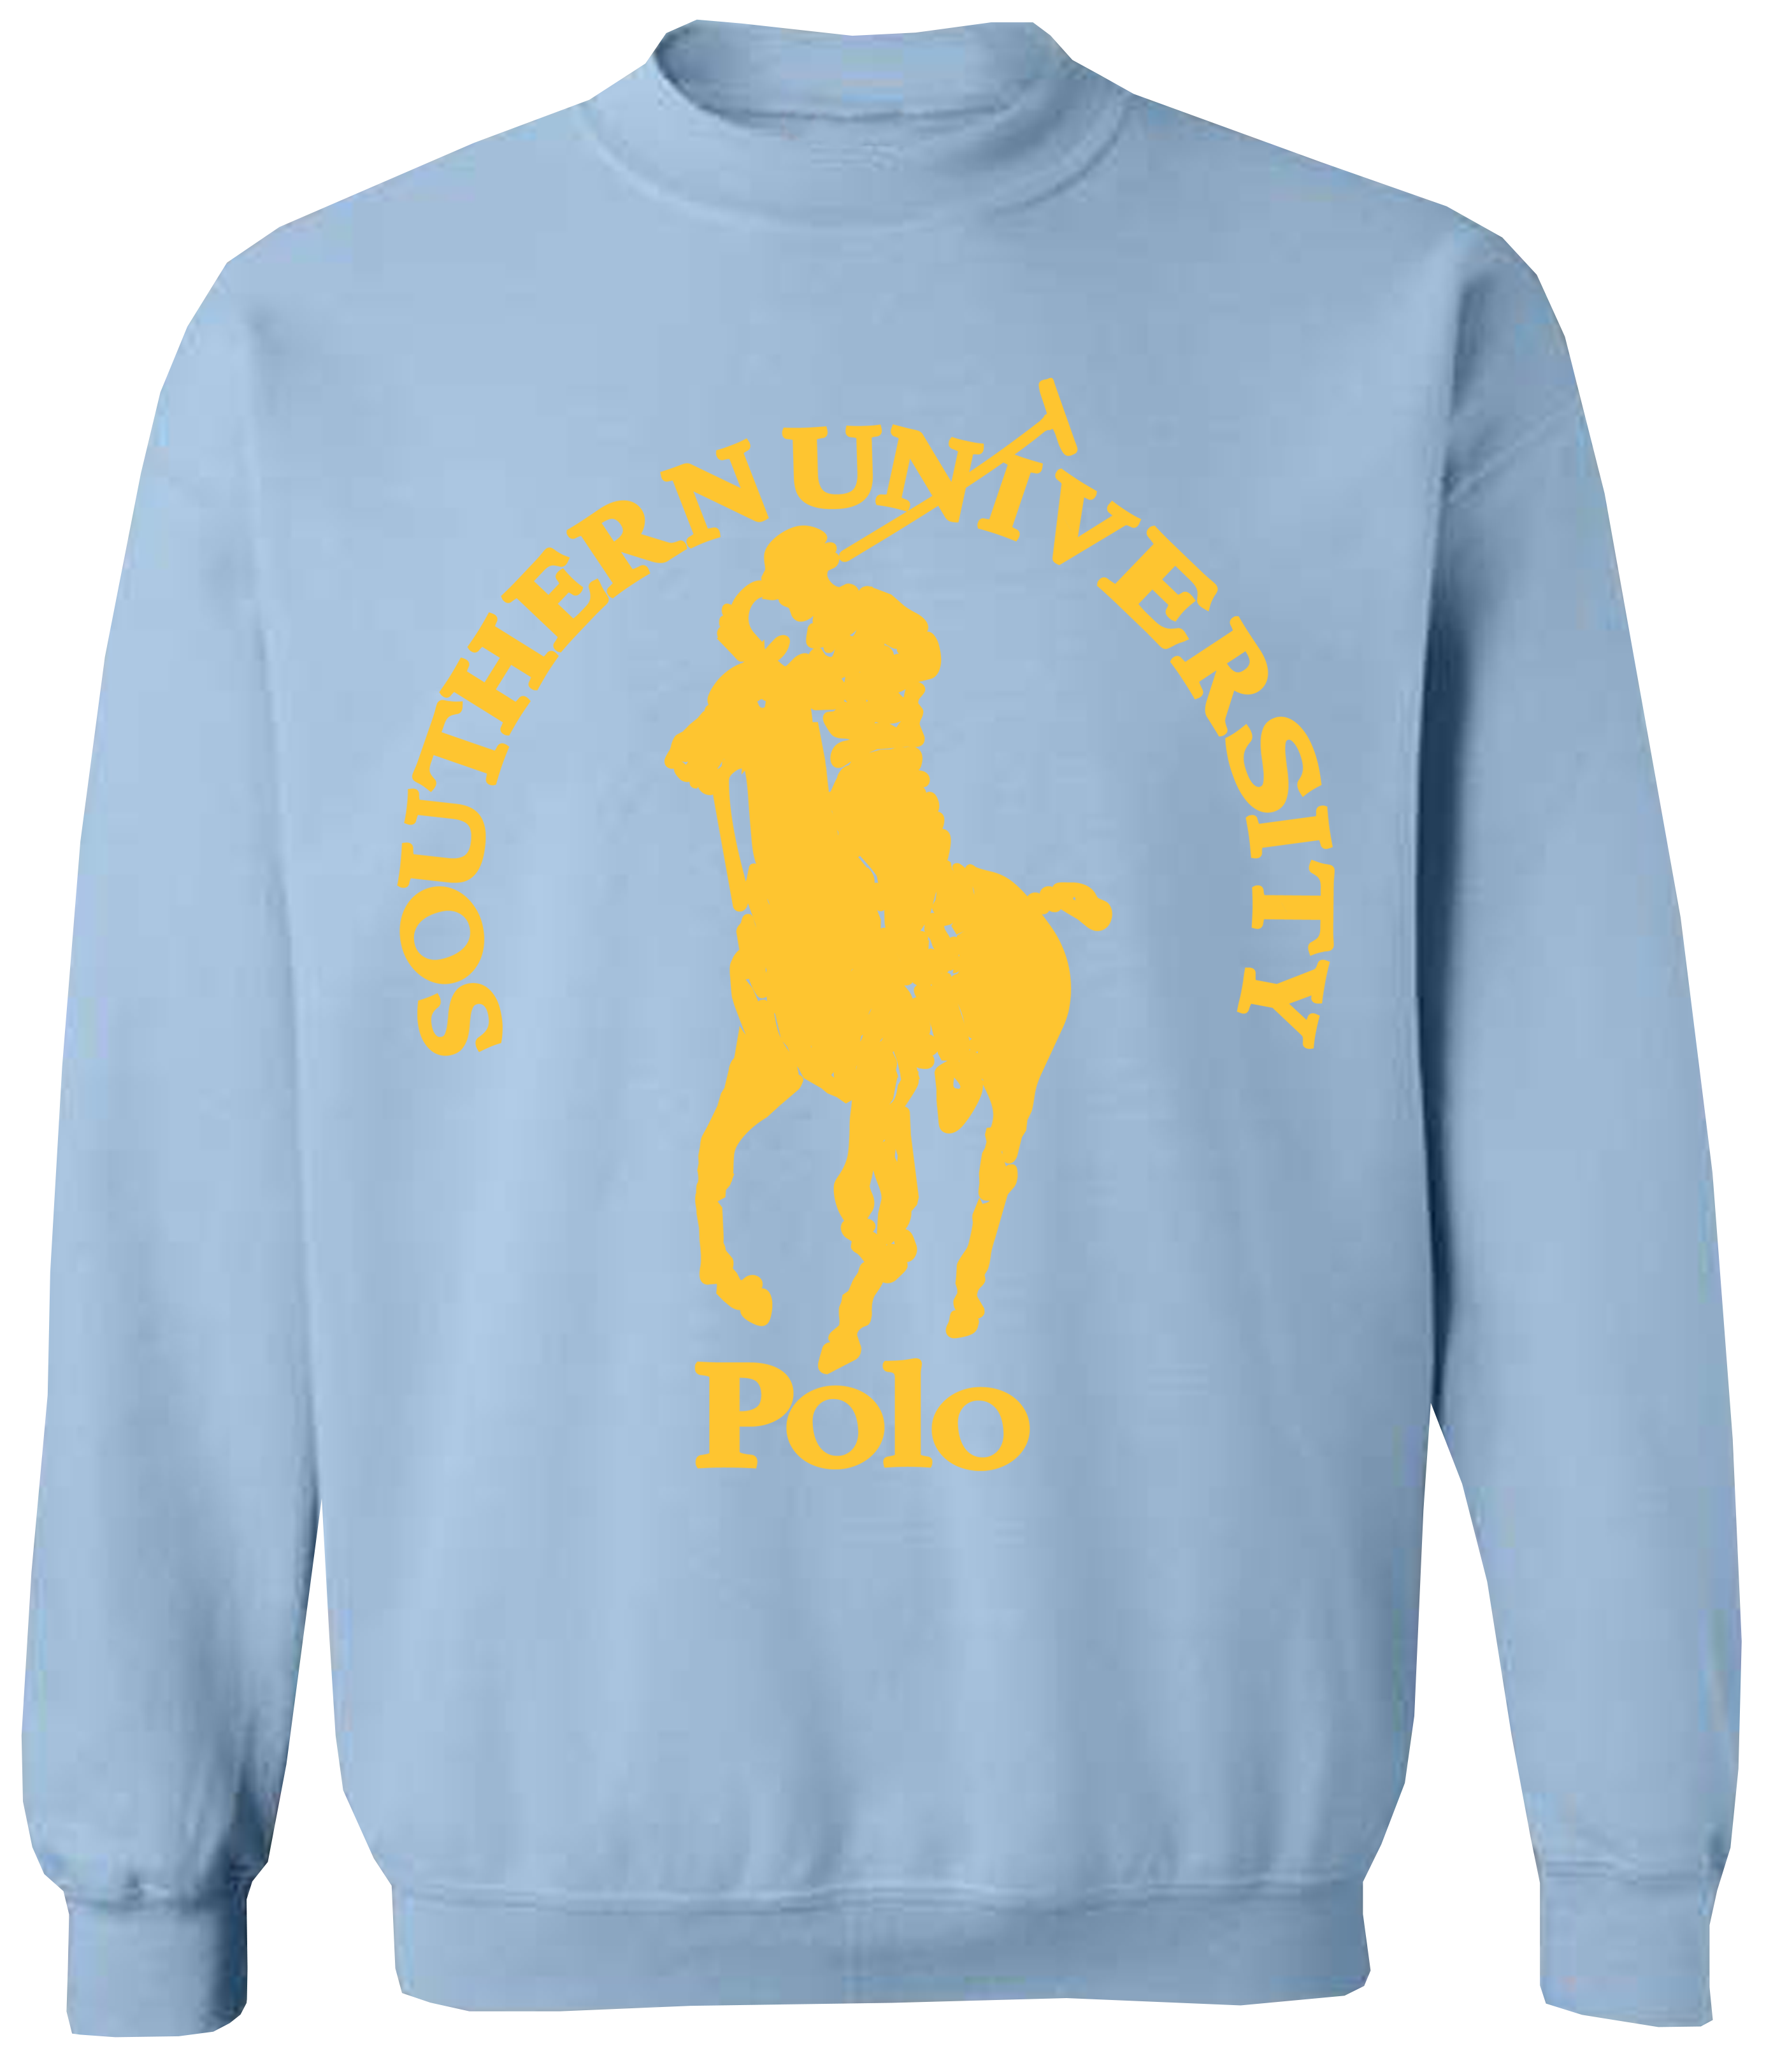 HBCU Polo Crewneck Sweatshirt - Southern